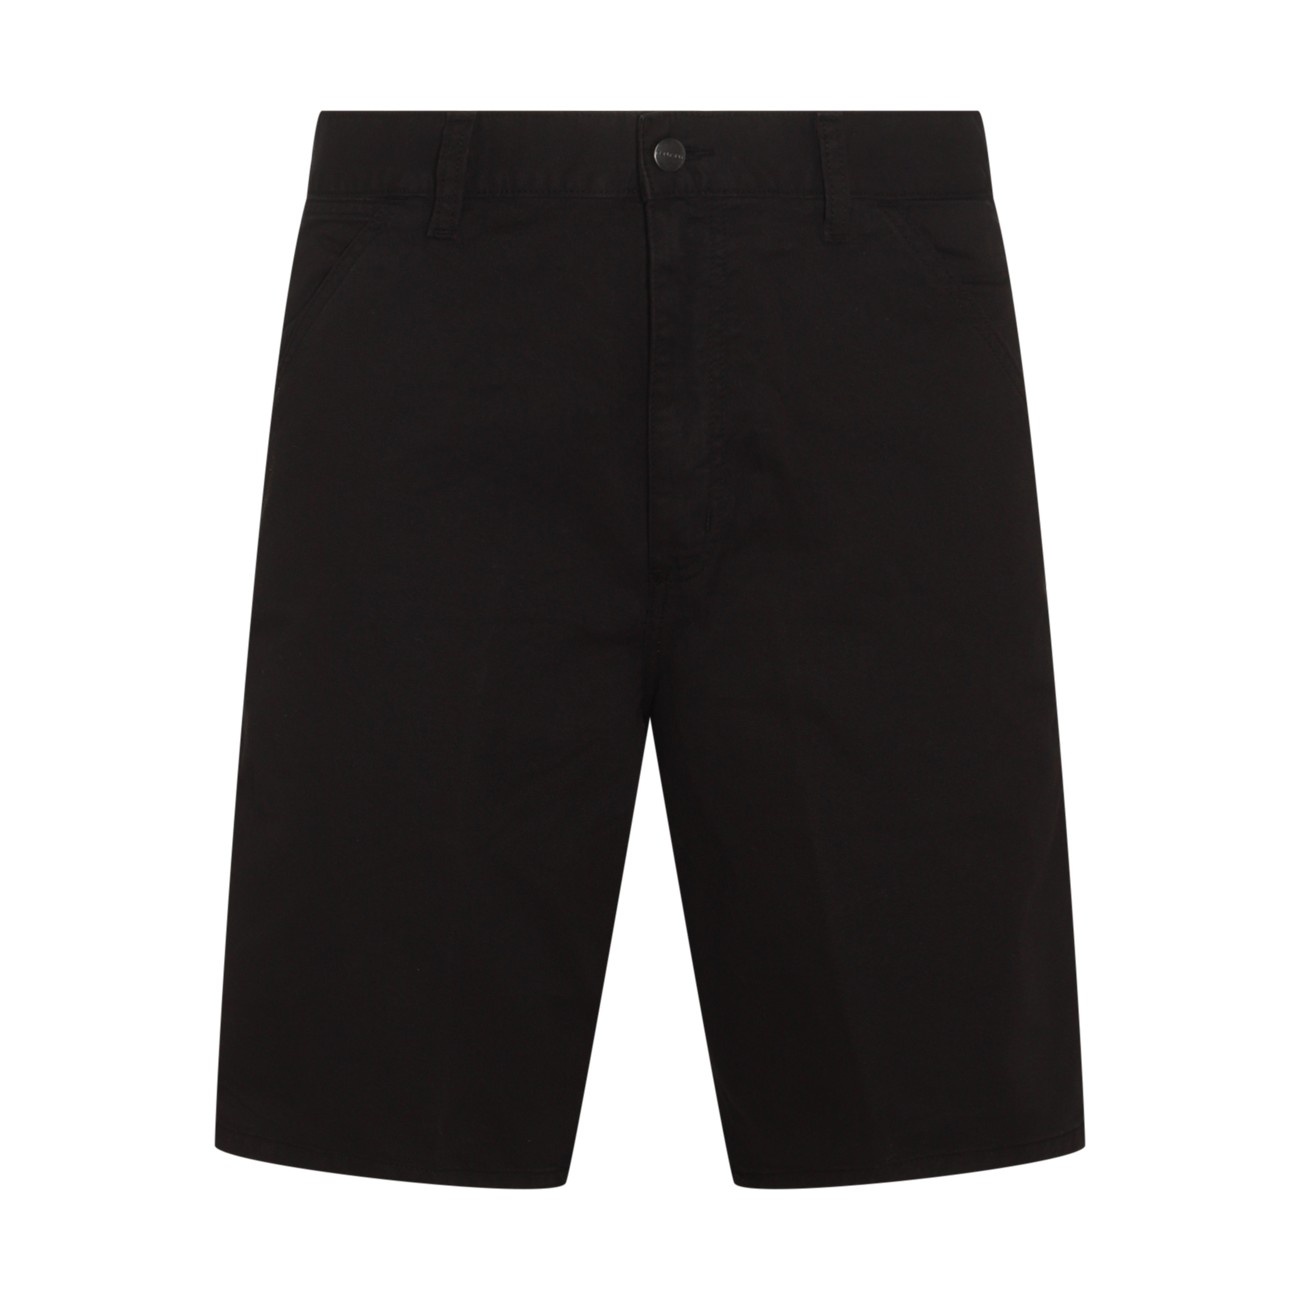 black cotton shorts - 1